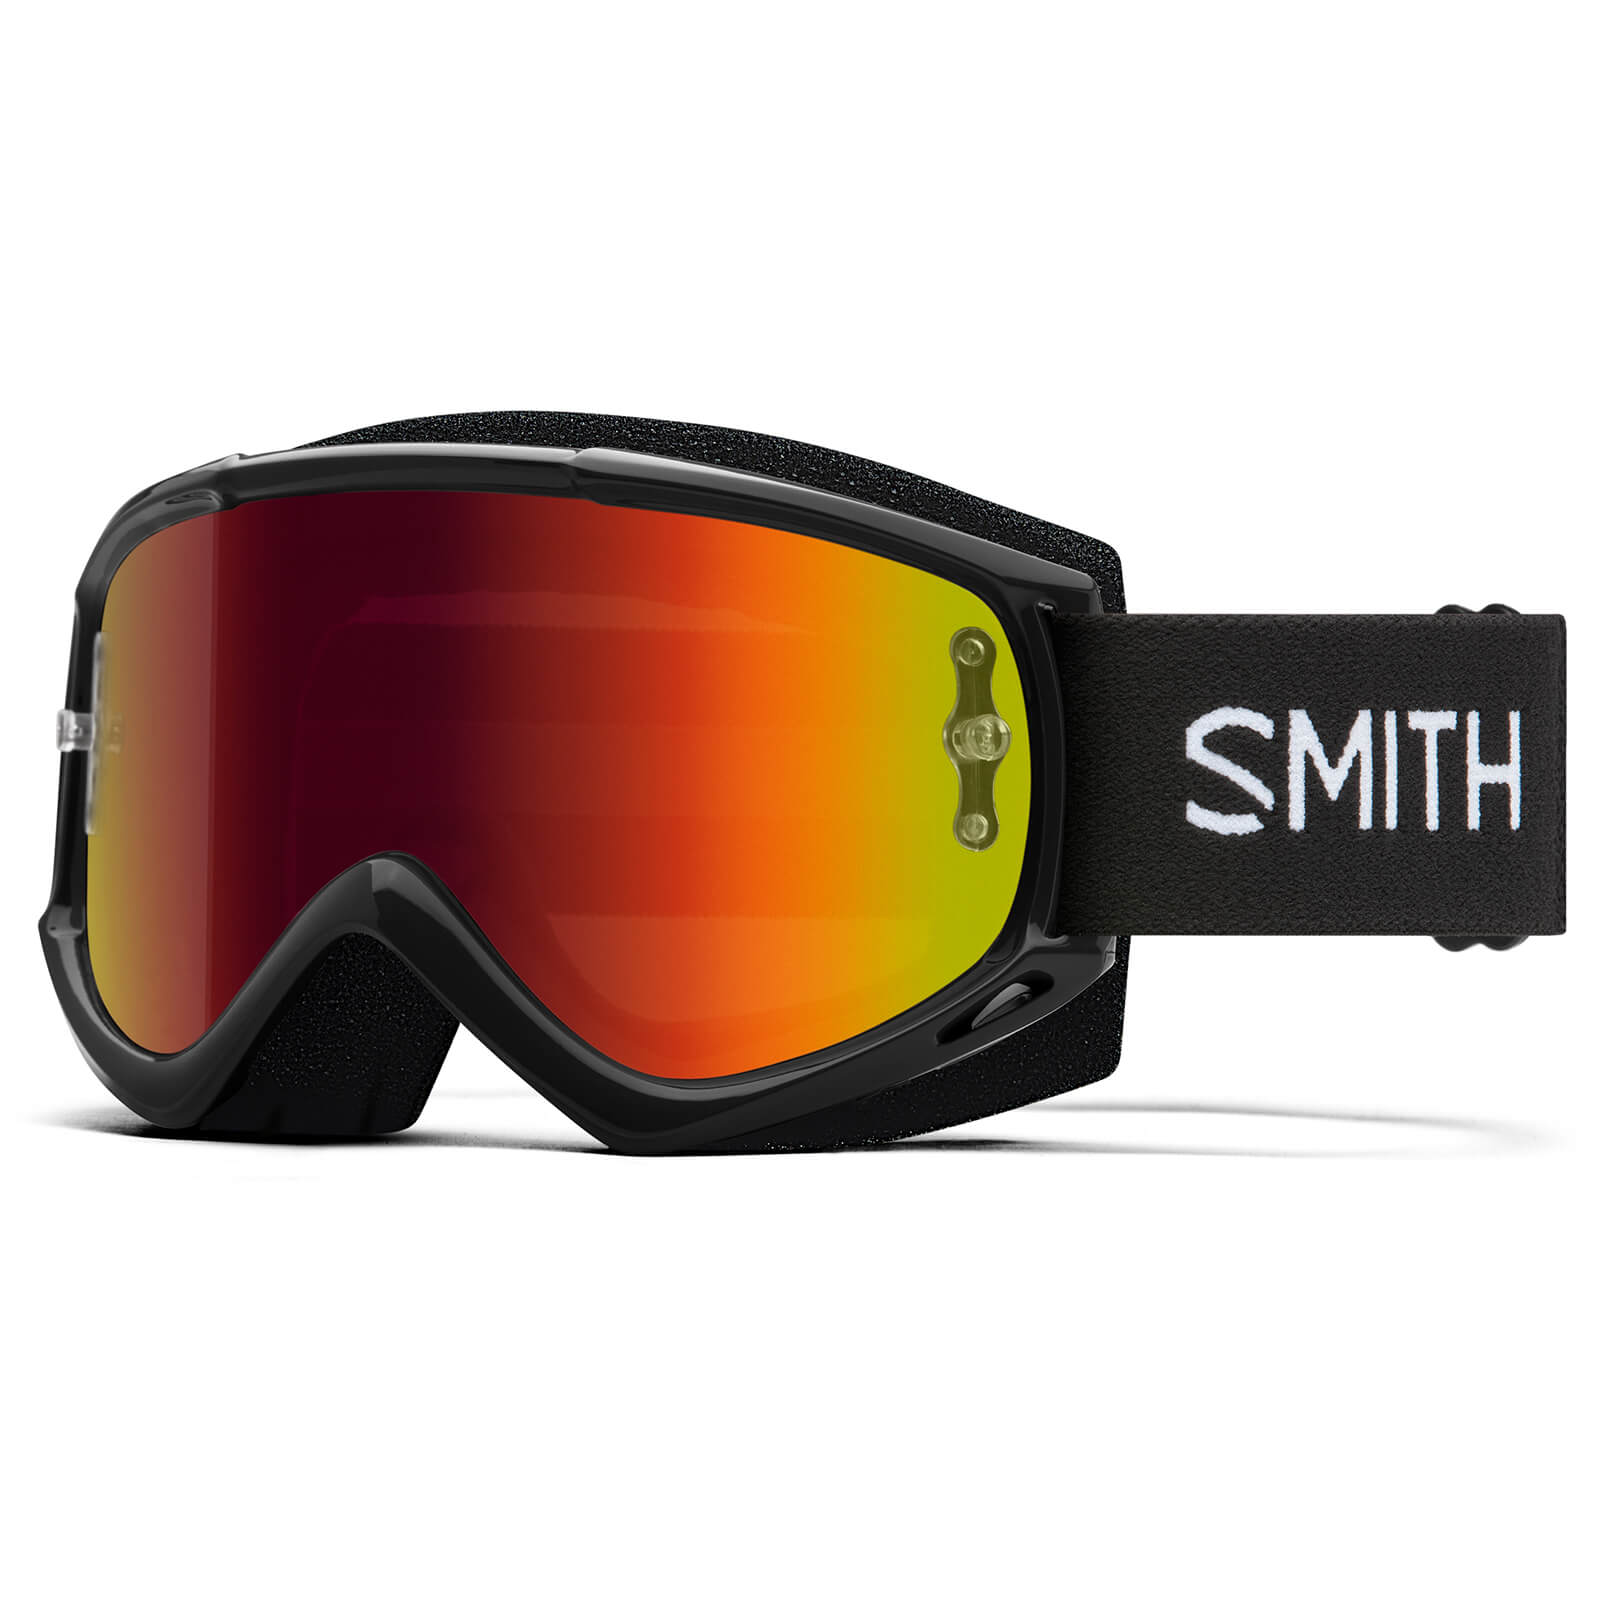 Smith Fuel V1 MTB Goggles - Red Mirror Lens - Black